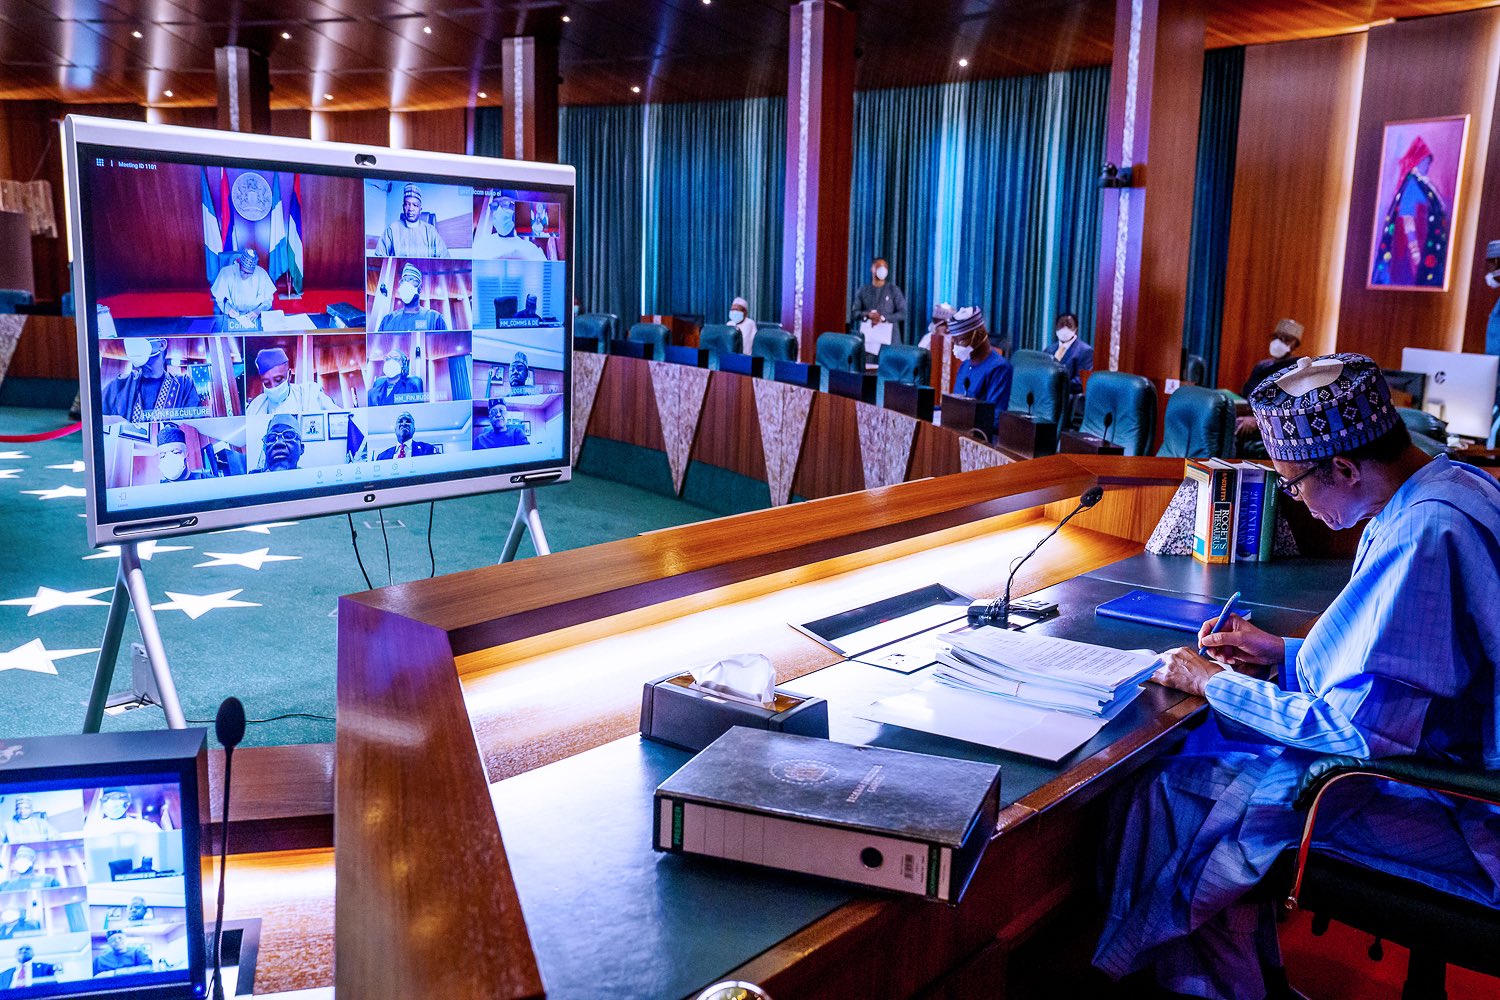 President Buhari Presides Over Valedictory FEC Meeting One Last Time